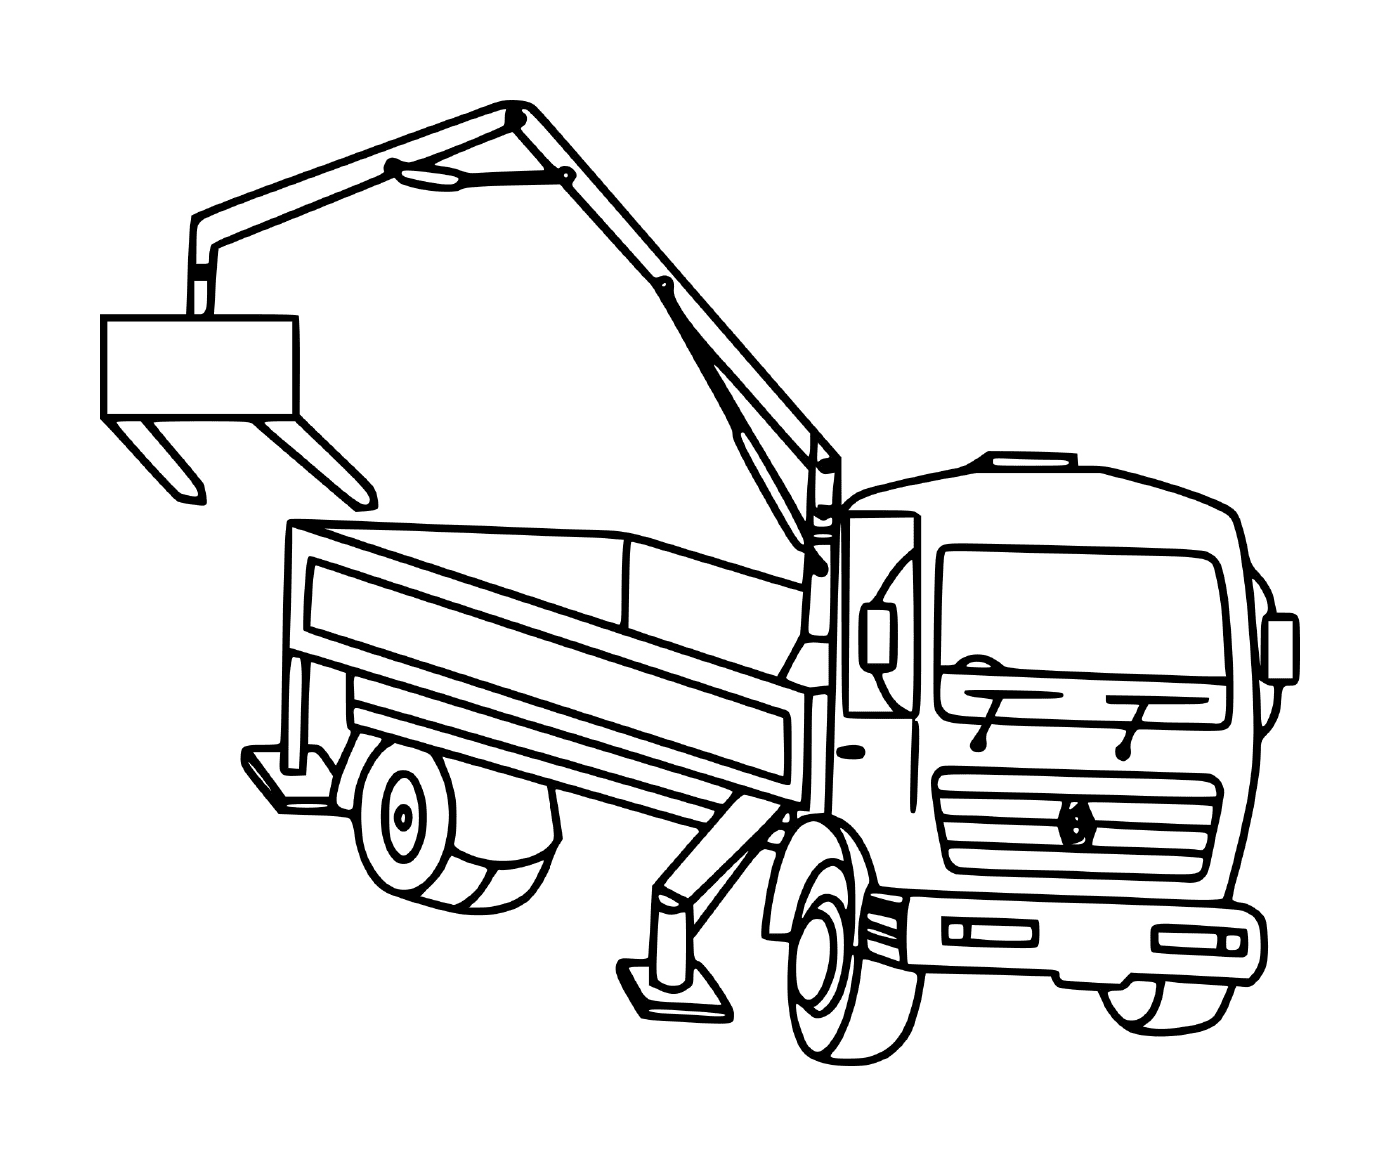  Truck crane, lifting equipment 